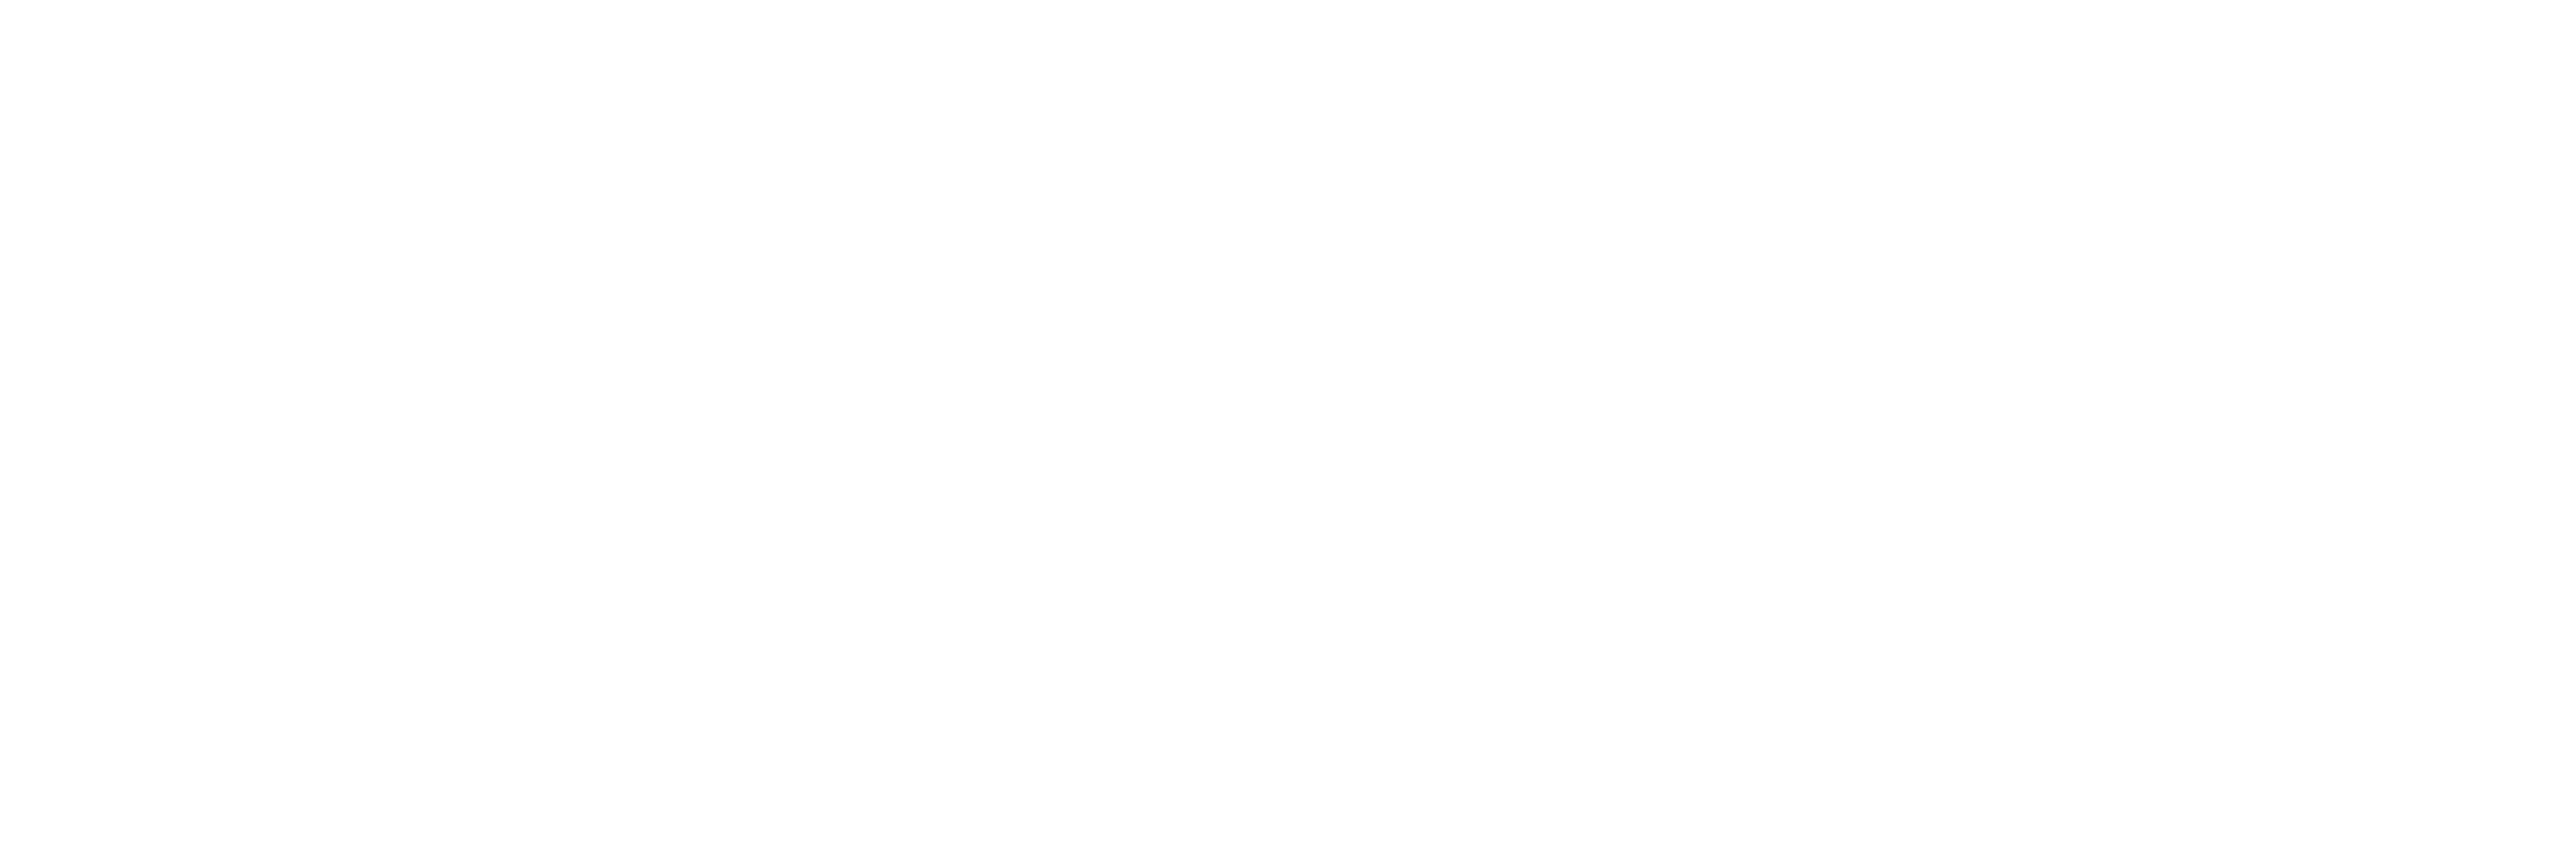 Grayscale Barbershop